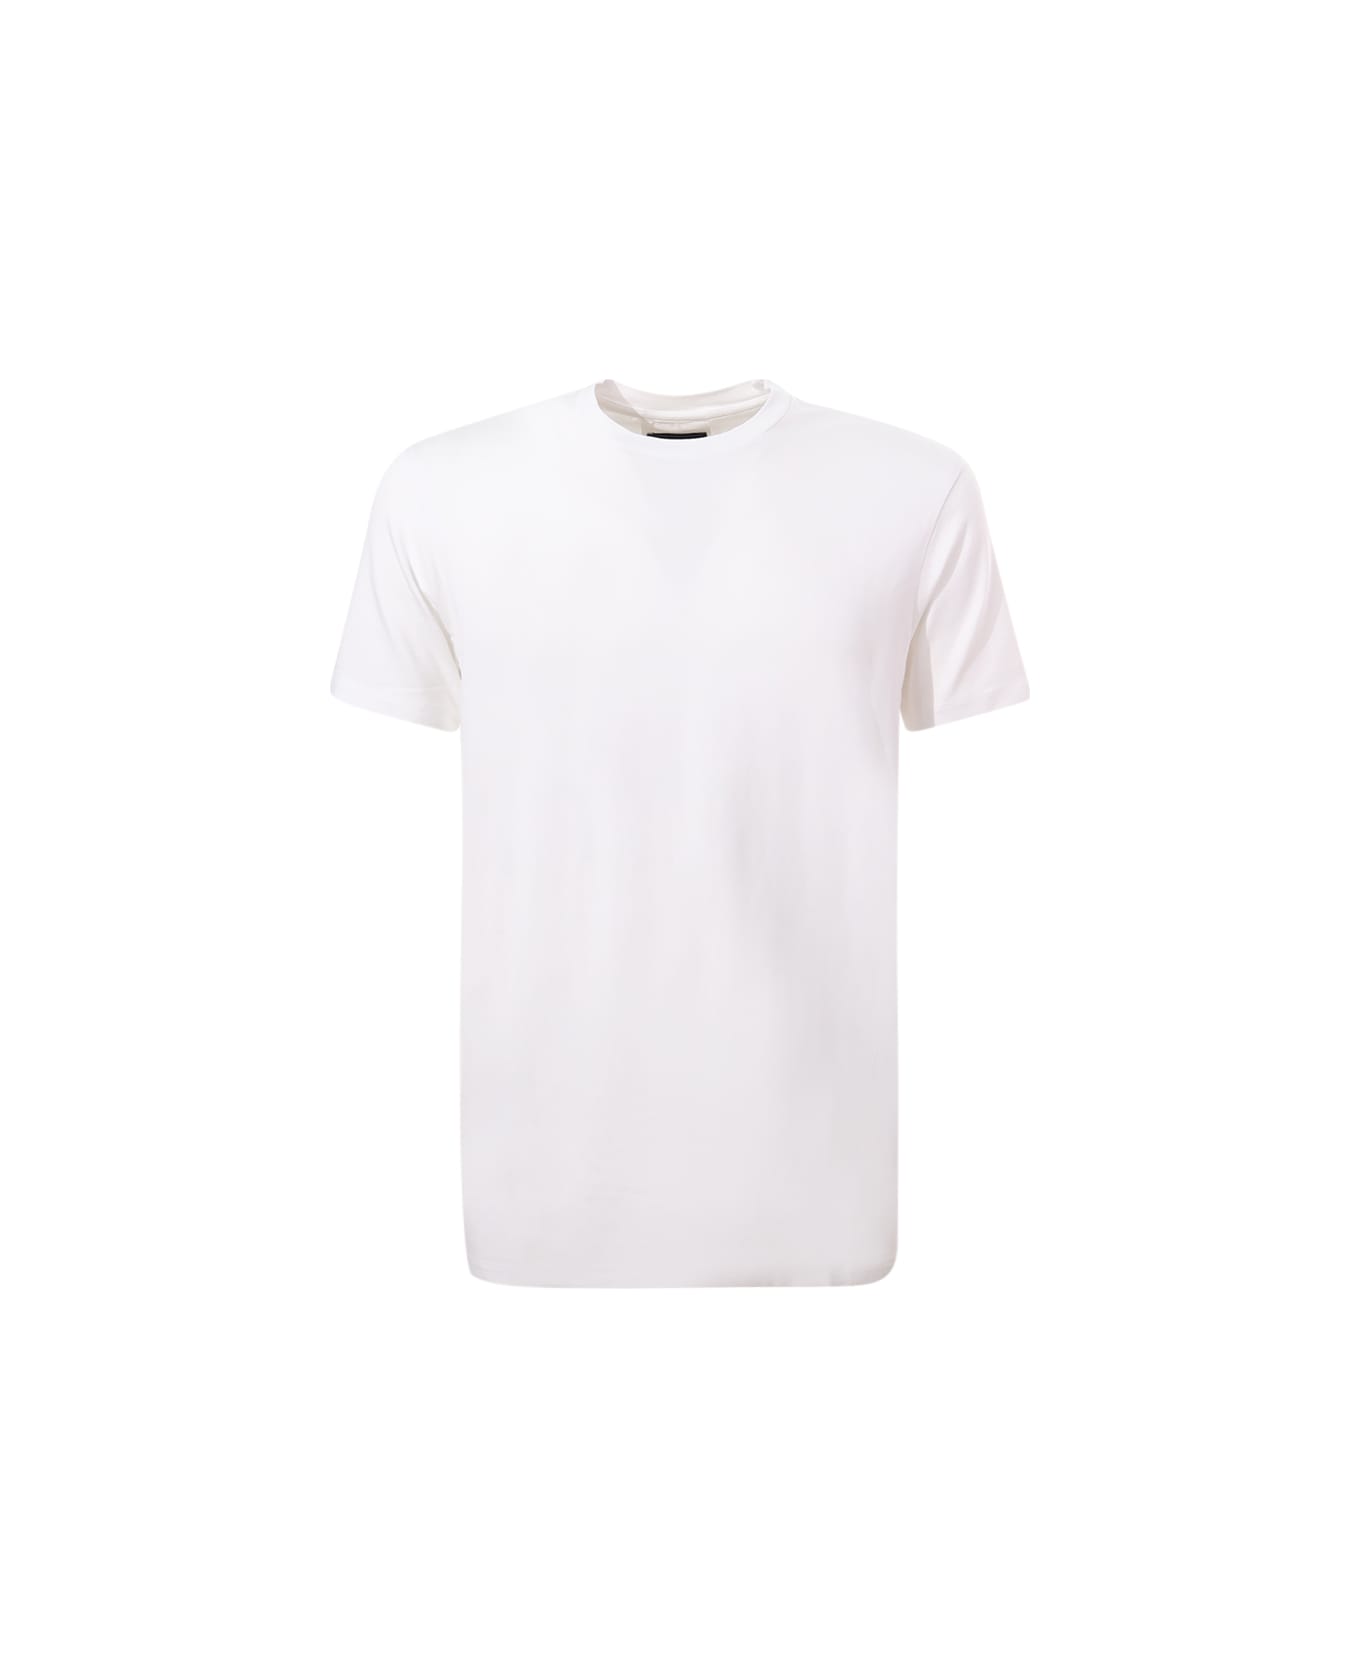 Emporio Armani T-shirt Emporio Armani - White